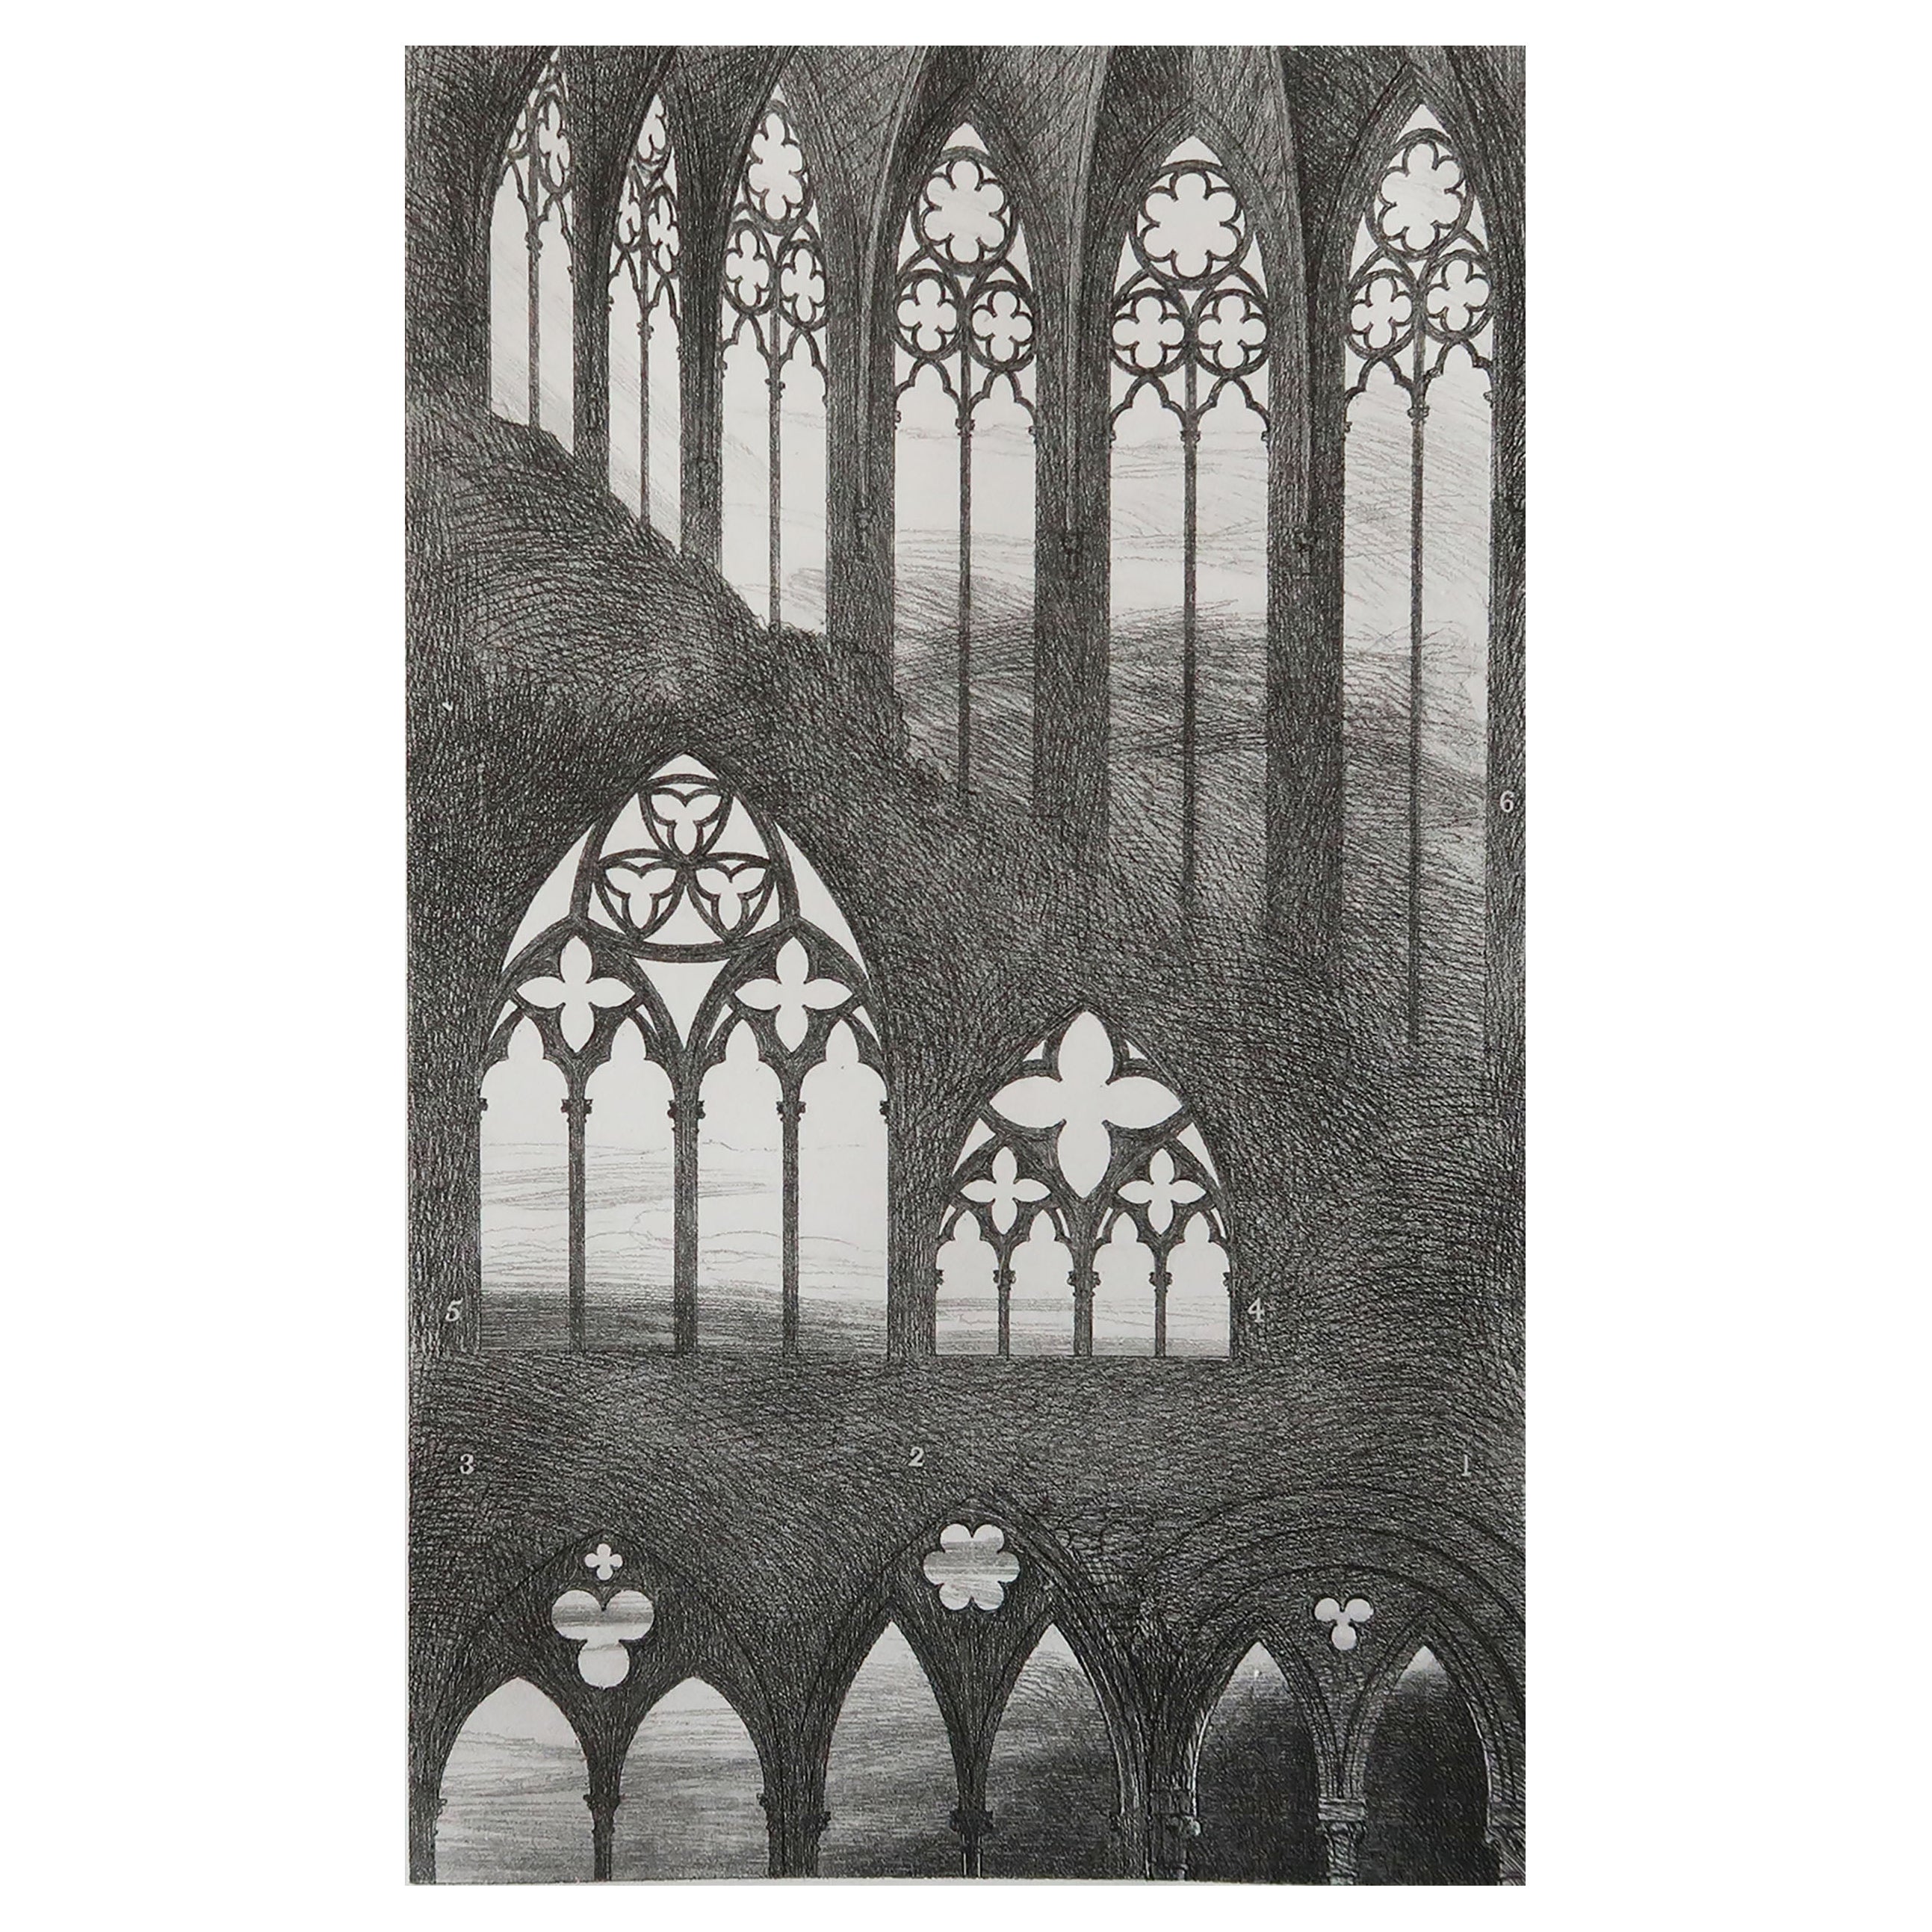 Original Antique Architectural Print by John Ruskin, circa 1880